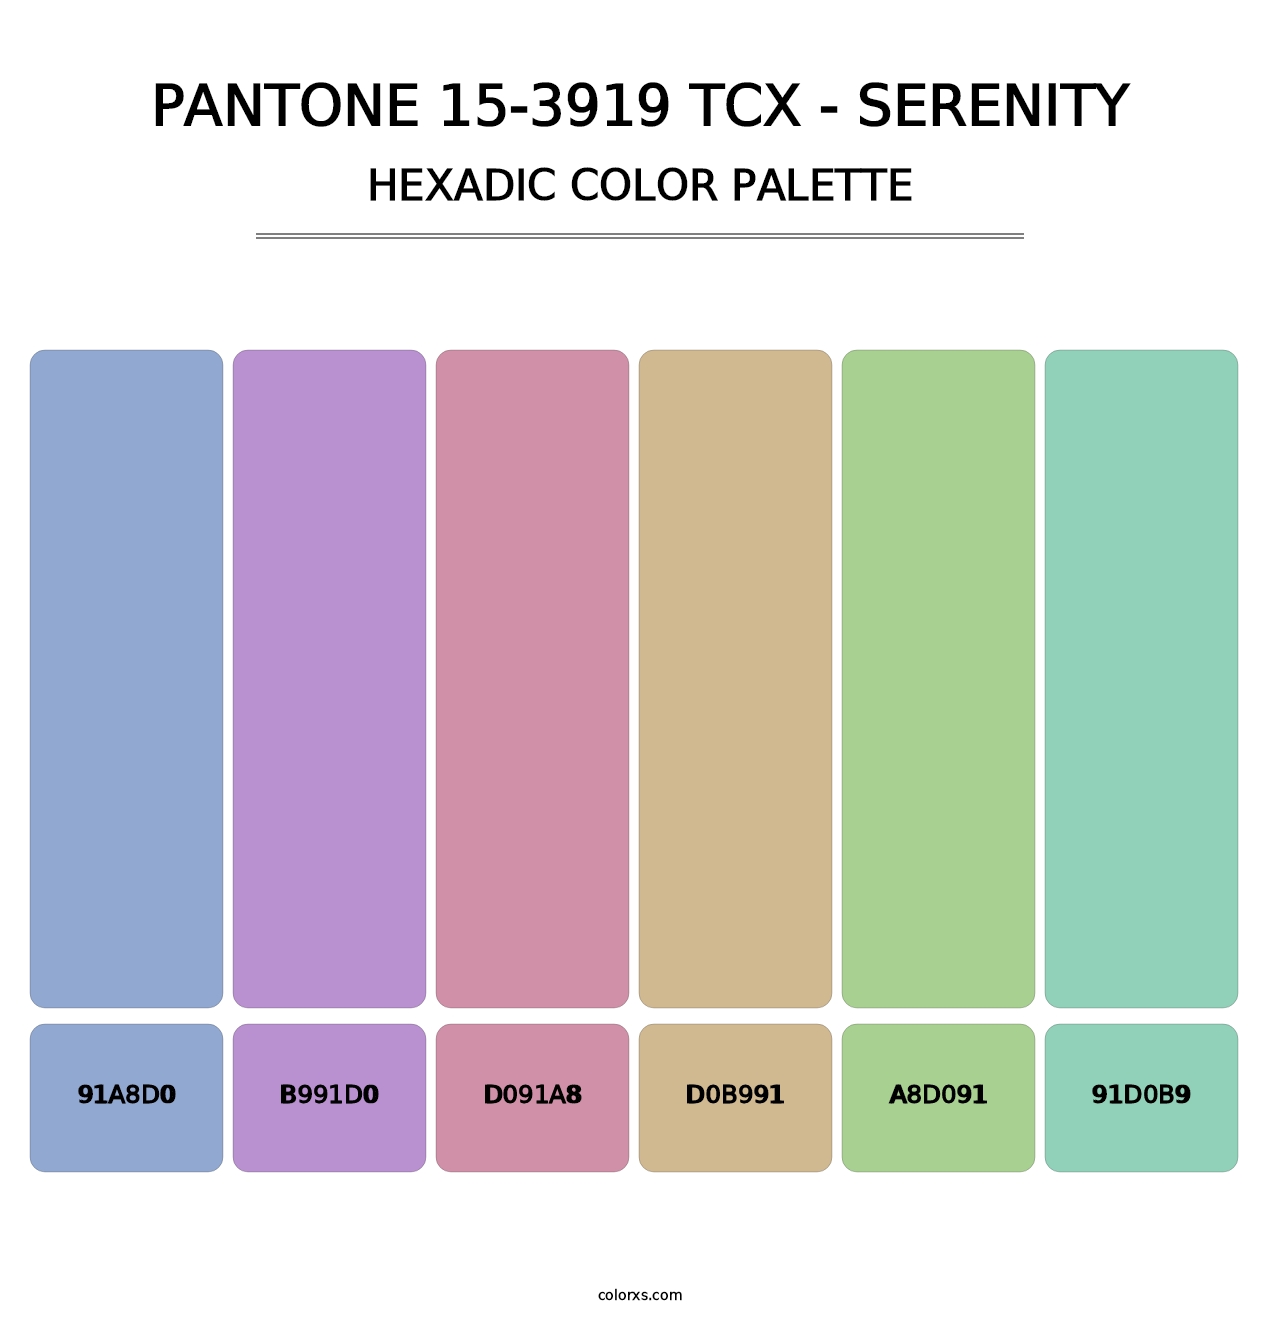 PANTONE 15-3919 TCX - Serenity - Hexadic Color Palette